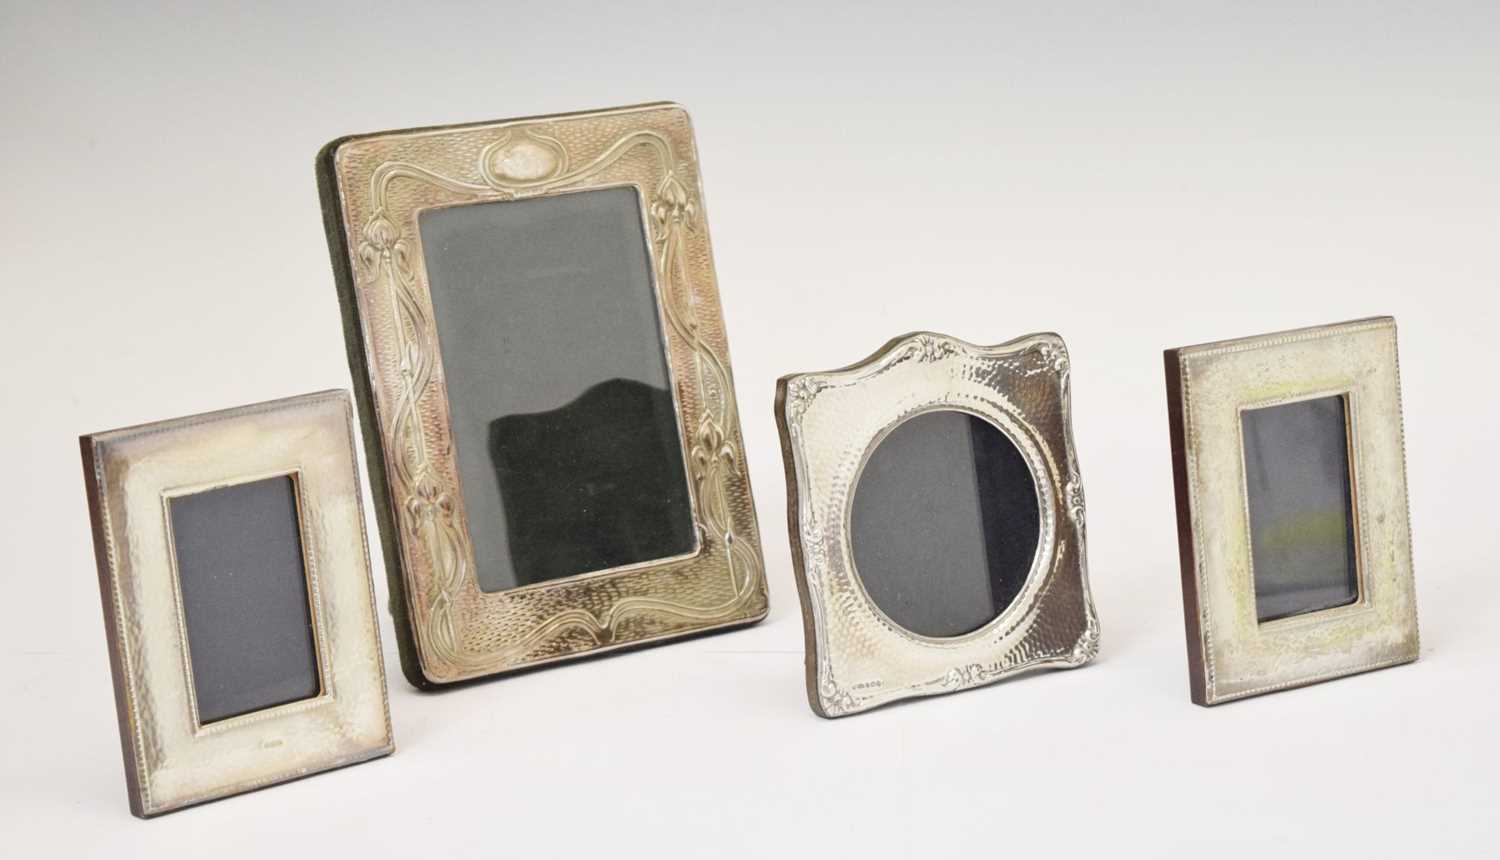 Four silver mounted easel photograph frames